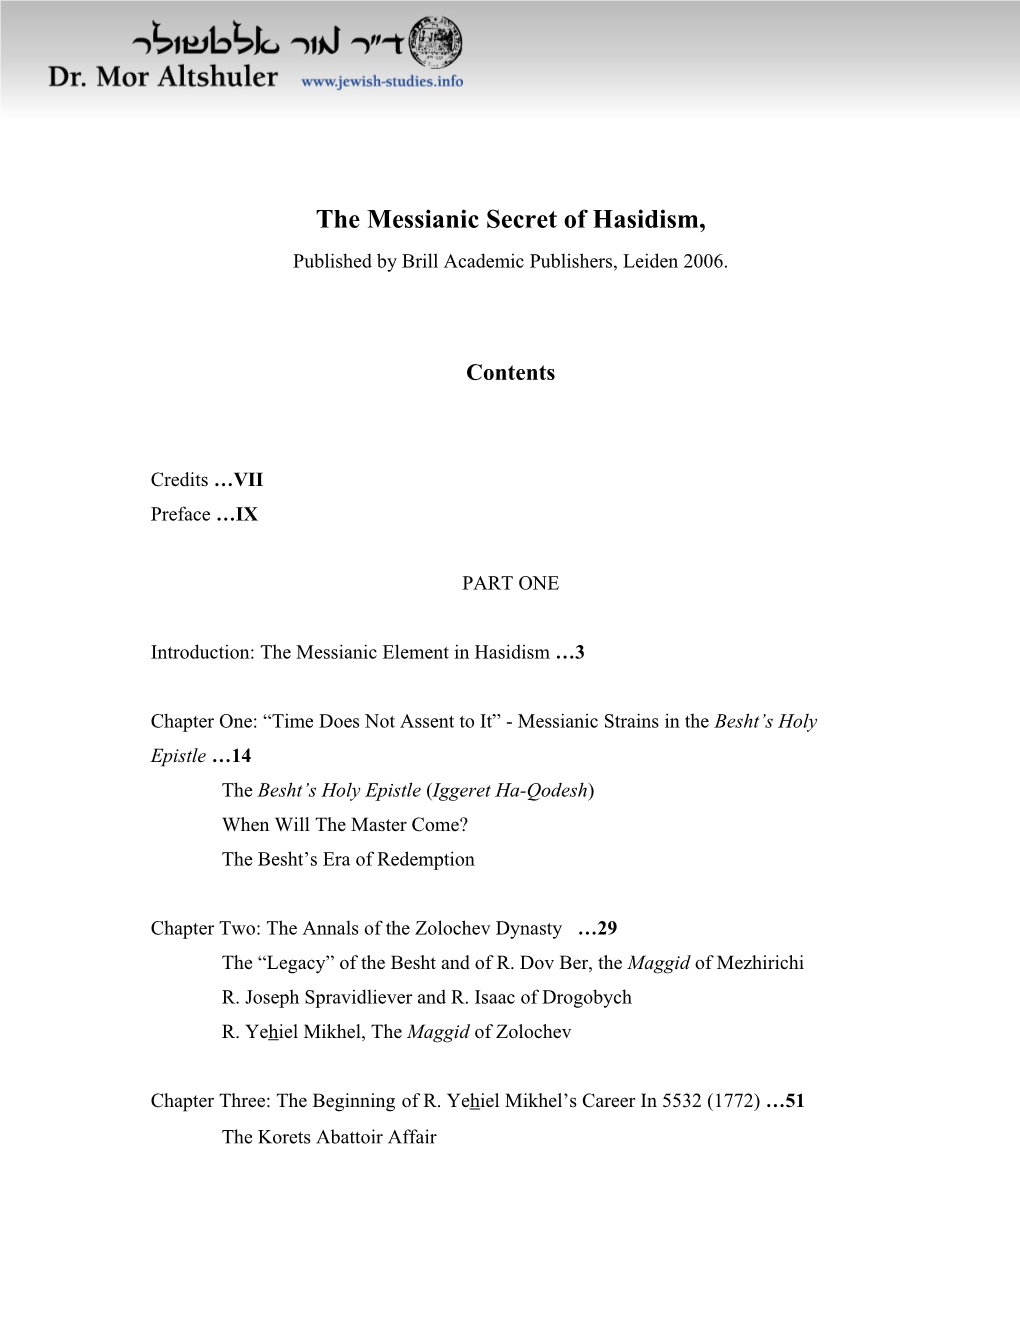 The Messianic Secret of Hasidism